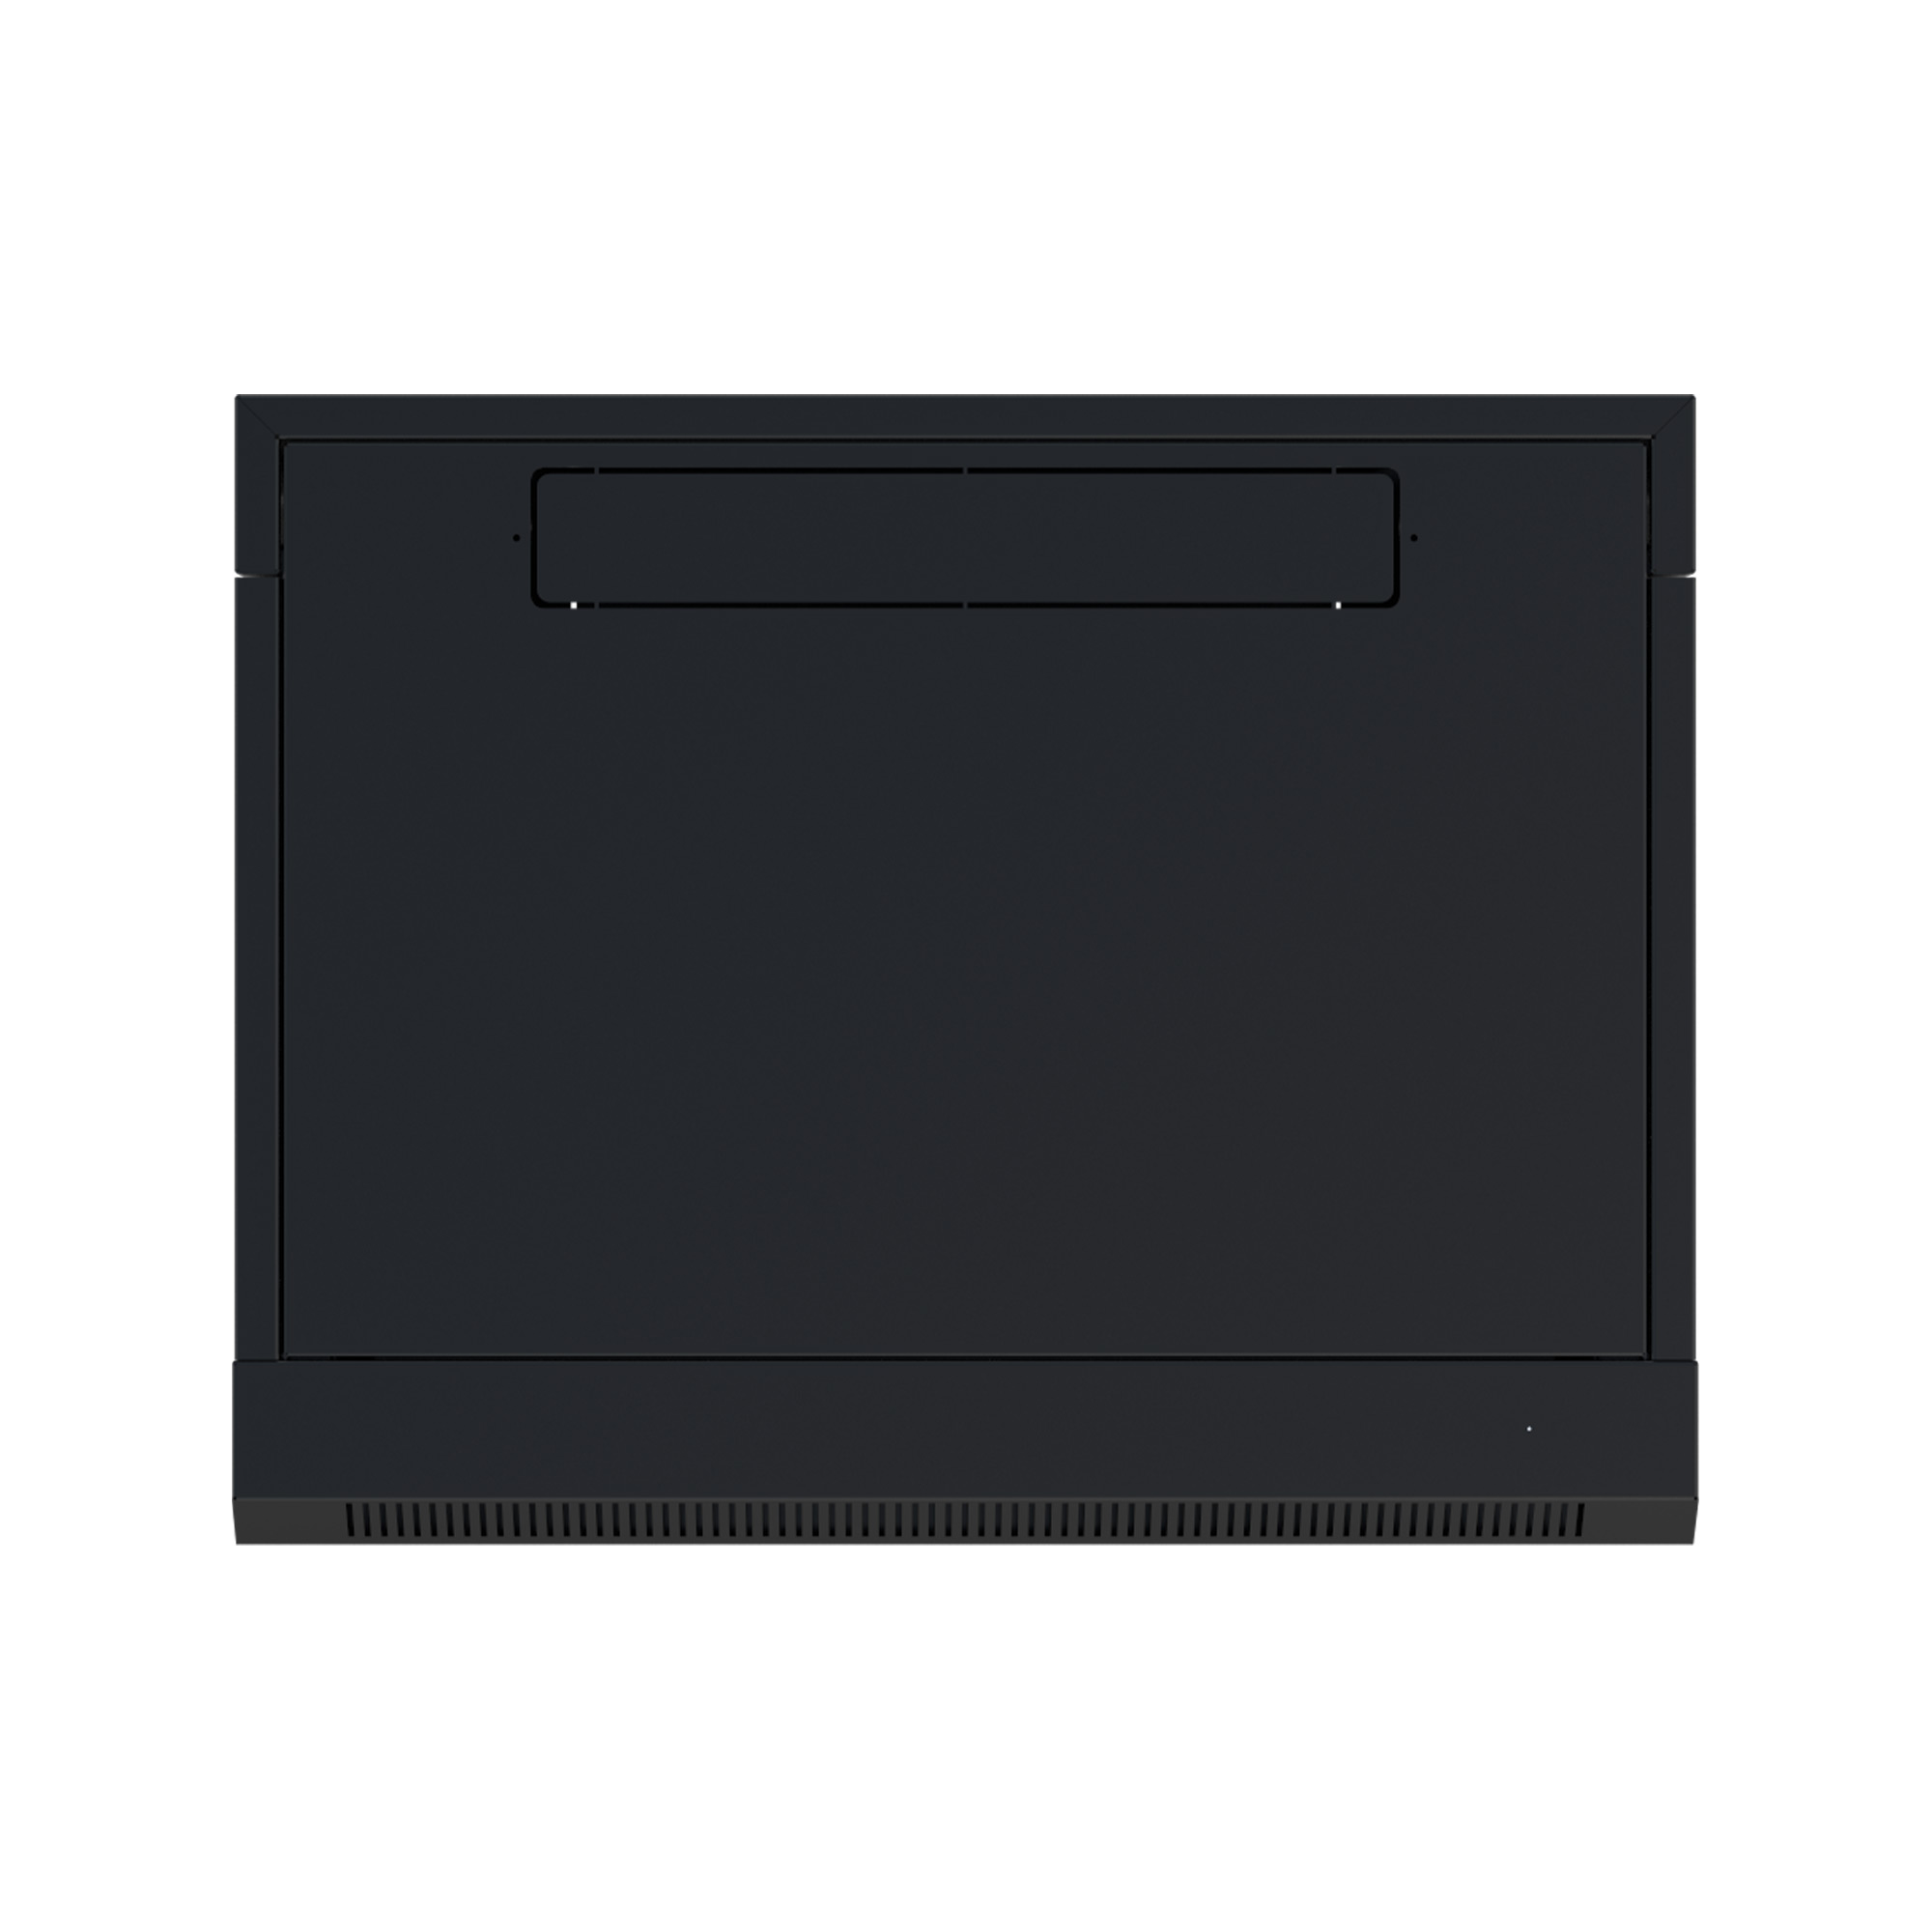 Шкаф монтажный настенный (9U) NTSS [ NTSS-W9U6045GS-2 ] (cо стеклянной дверью  600х450х500 мм, серый)